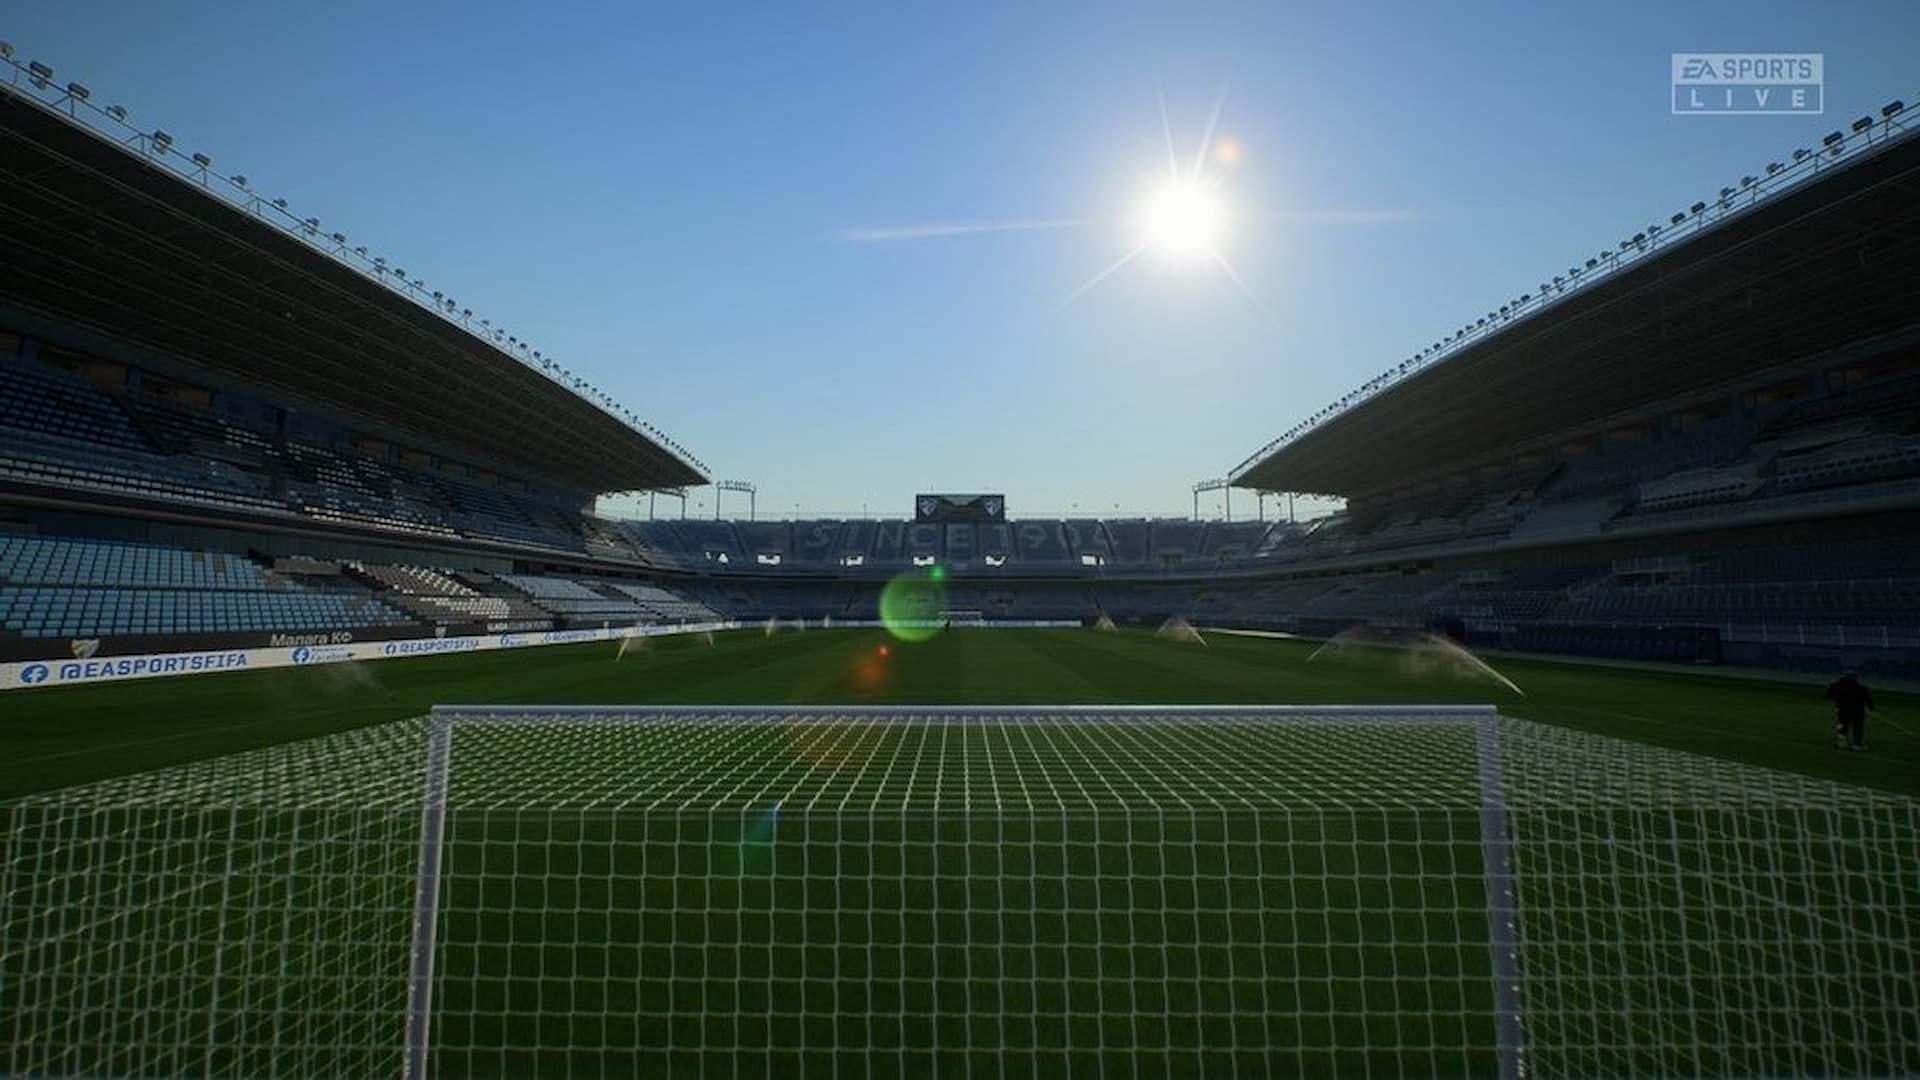 Estadio La Rosaleda in Malaga (Image via EA Sports)